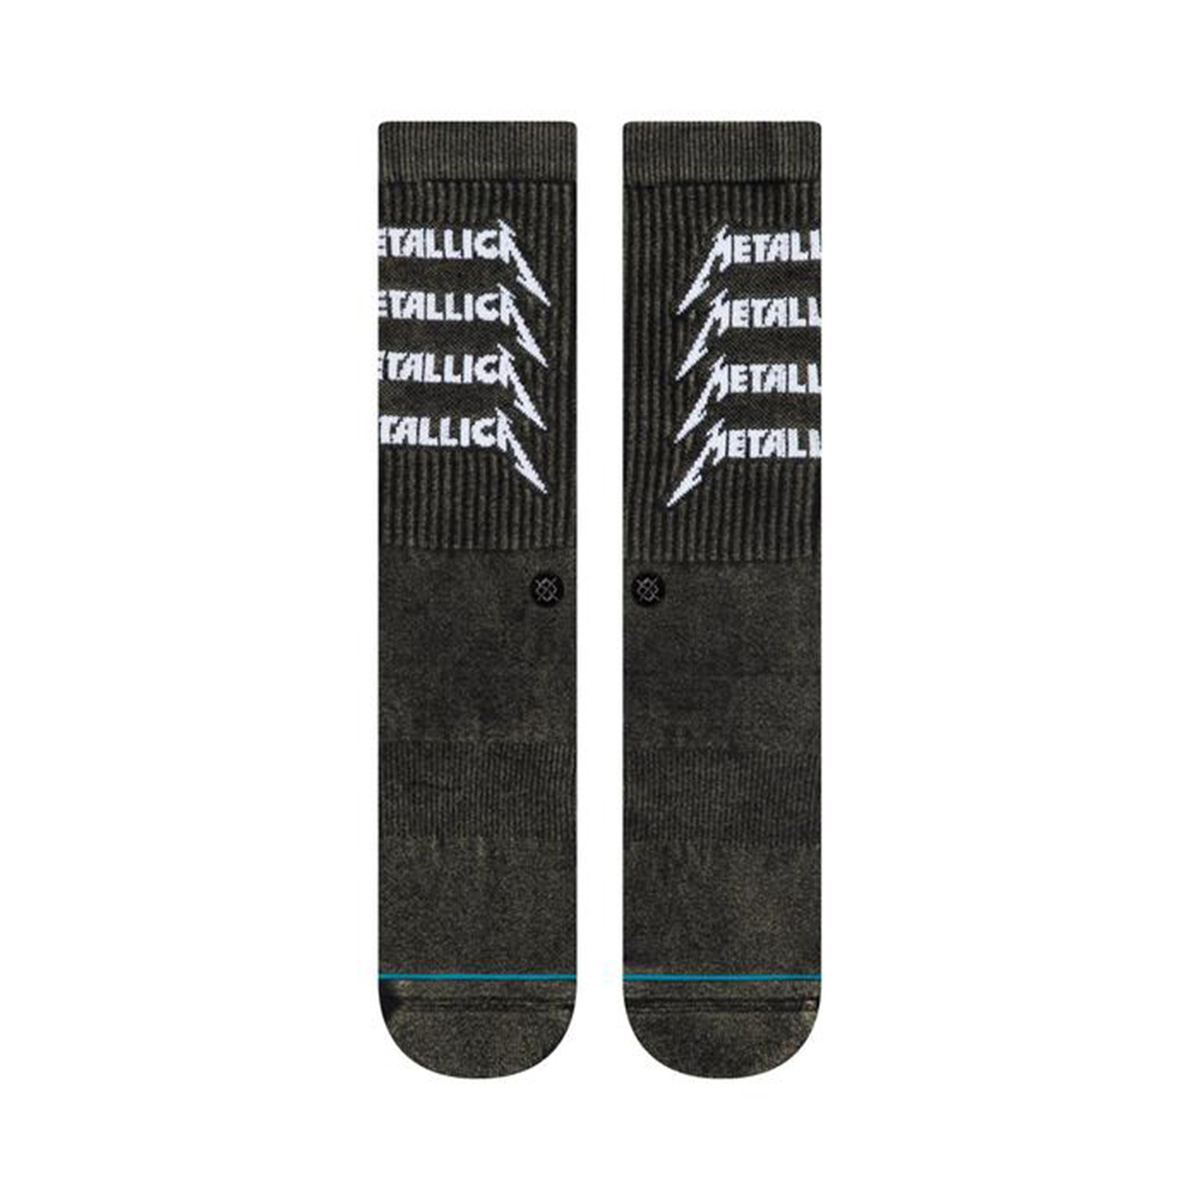 1 Paar Stance Foundation Classic Medium Cushion Socken Metallica Stack schwarz